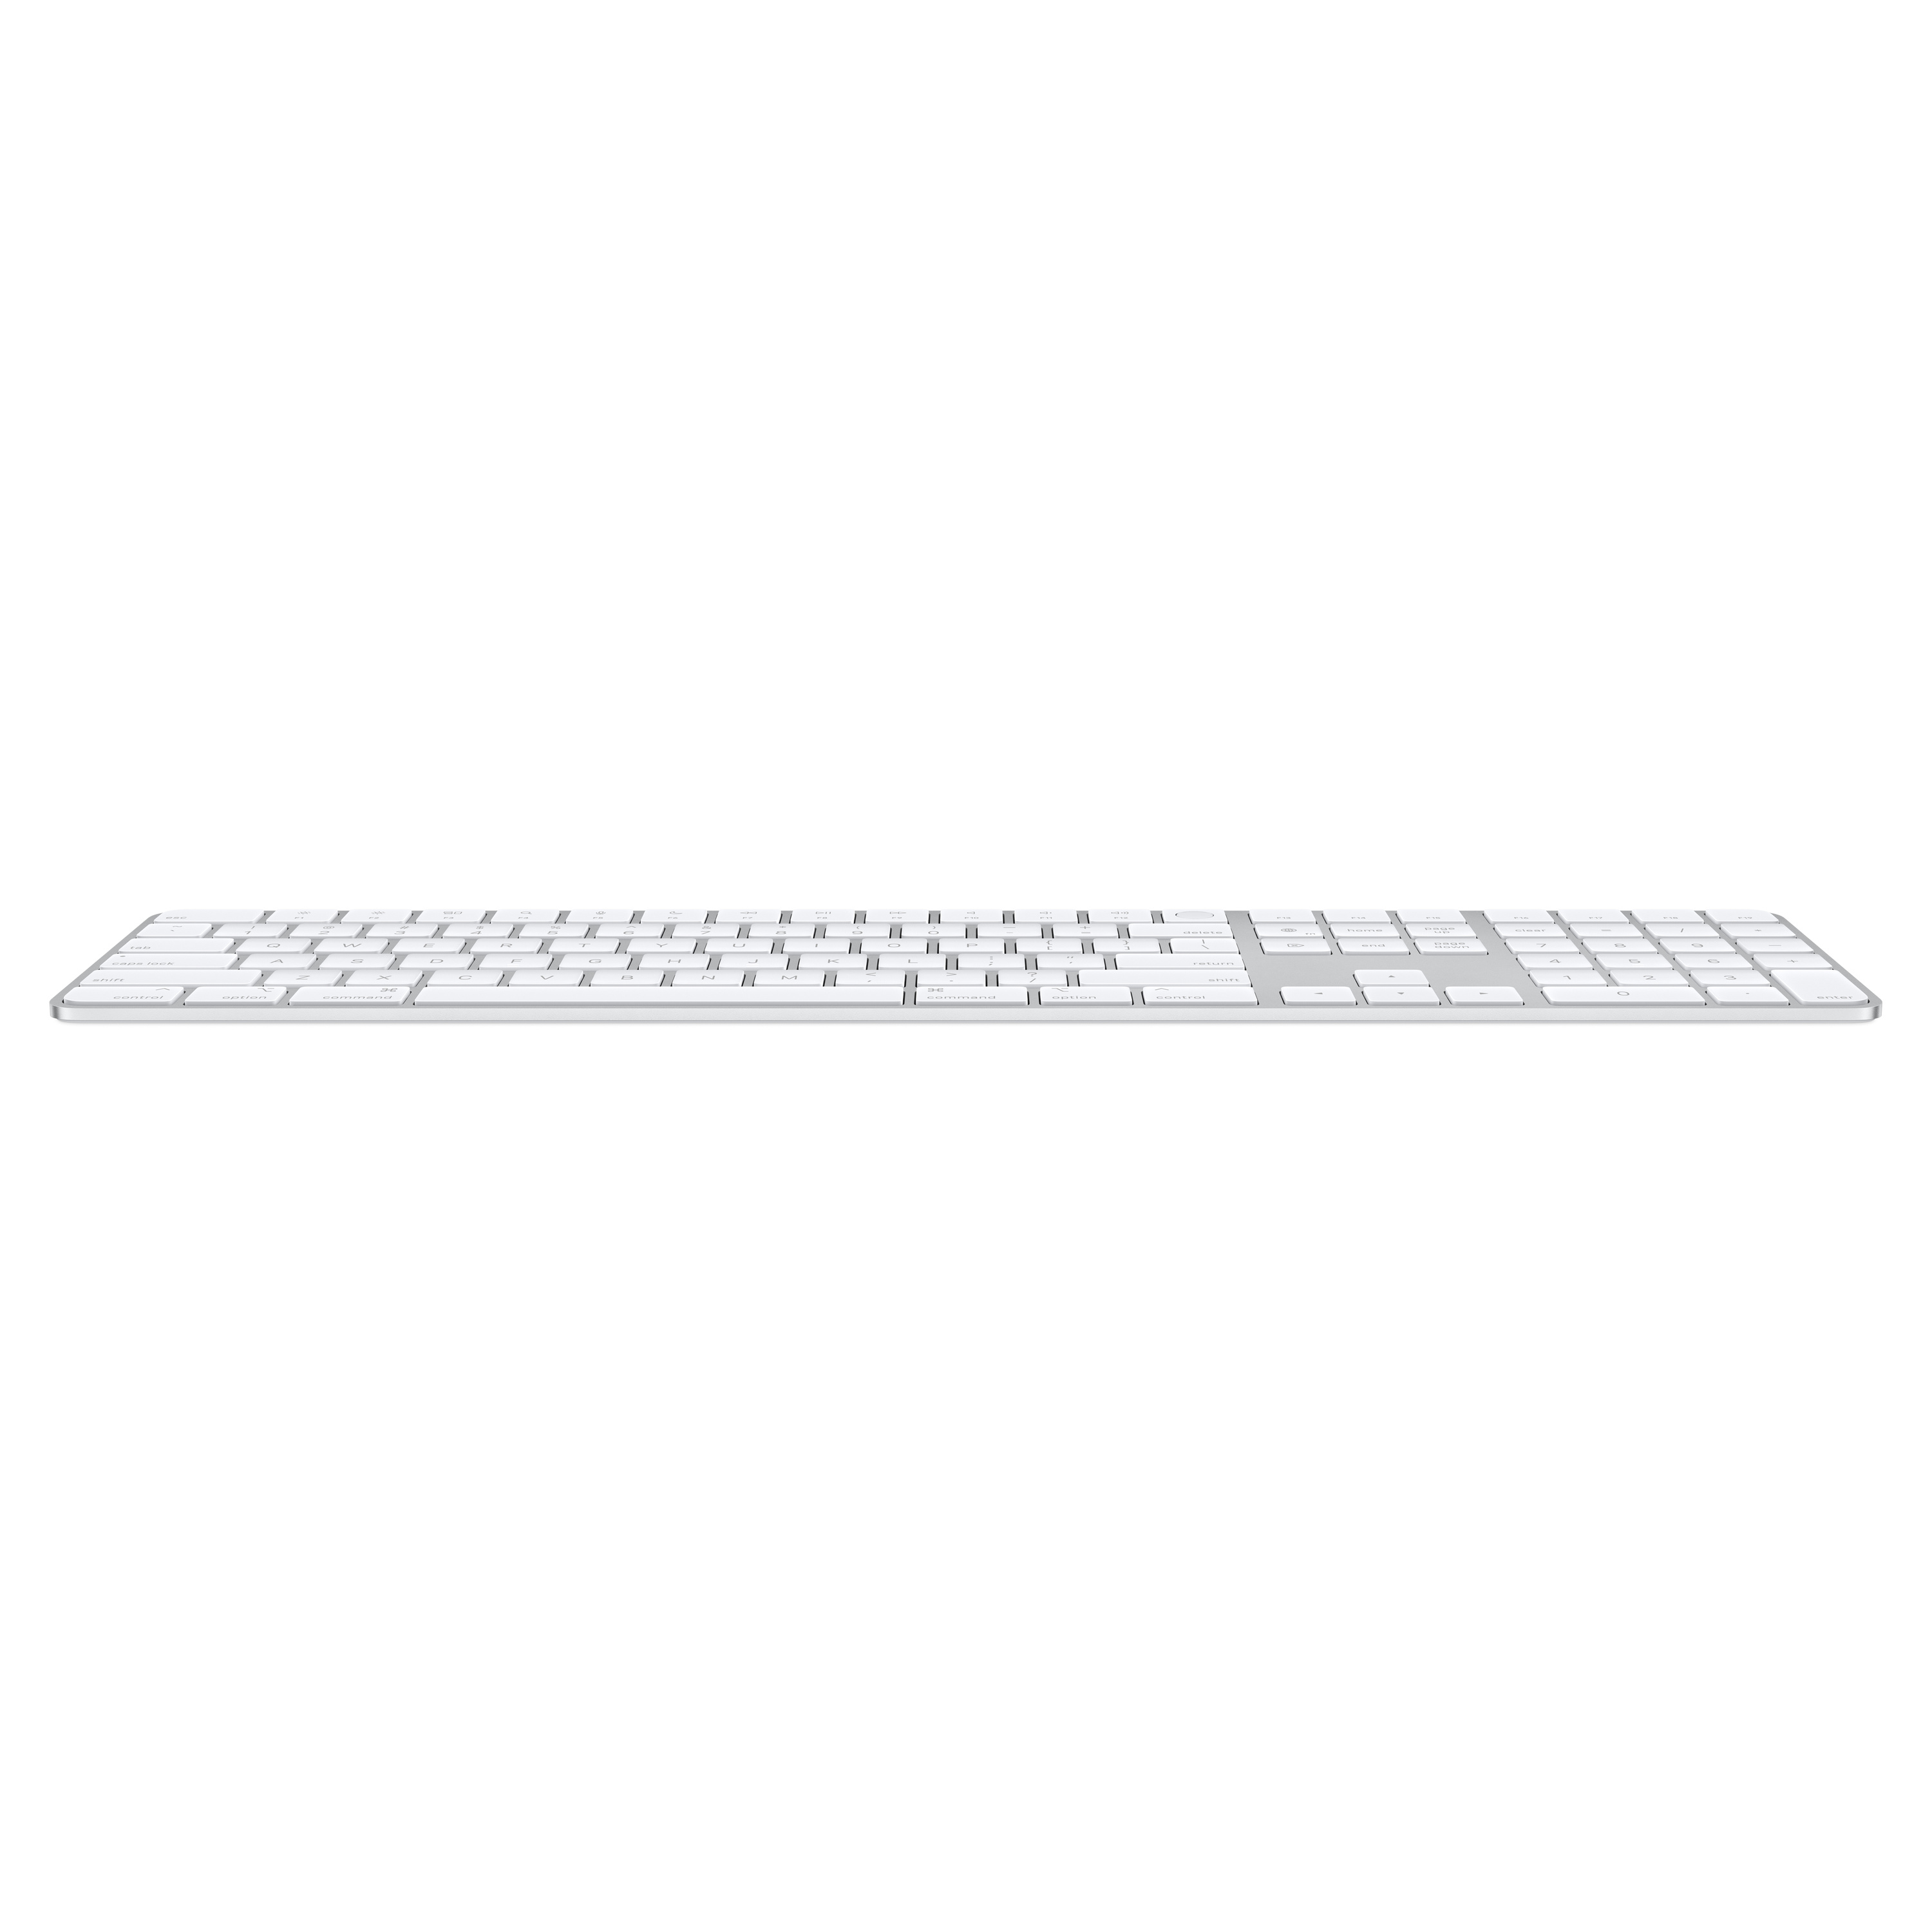 Apple Magic Keyboard with Touch ID and Numeric Keypad - Tastatur - Bluetooth, USB-C - QWERTY - International Englisch - für iMac (Anfang 2021)